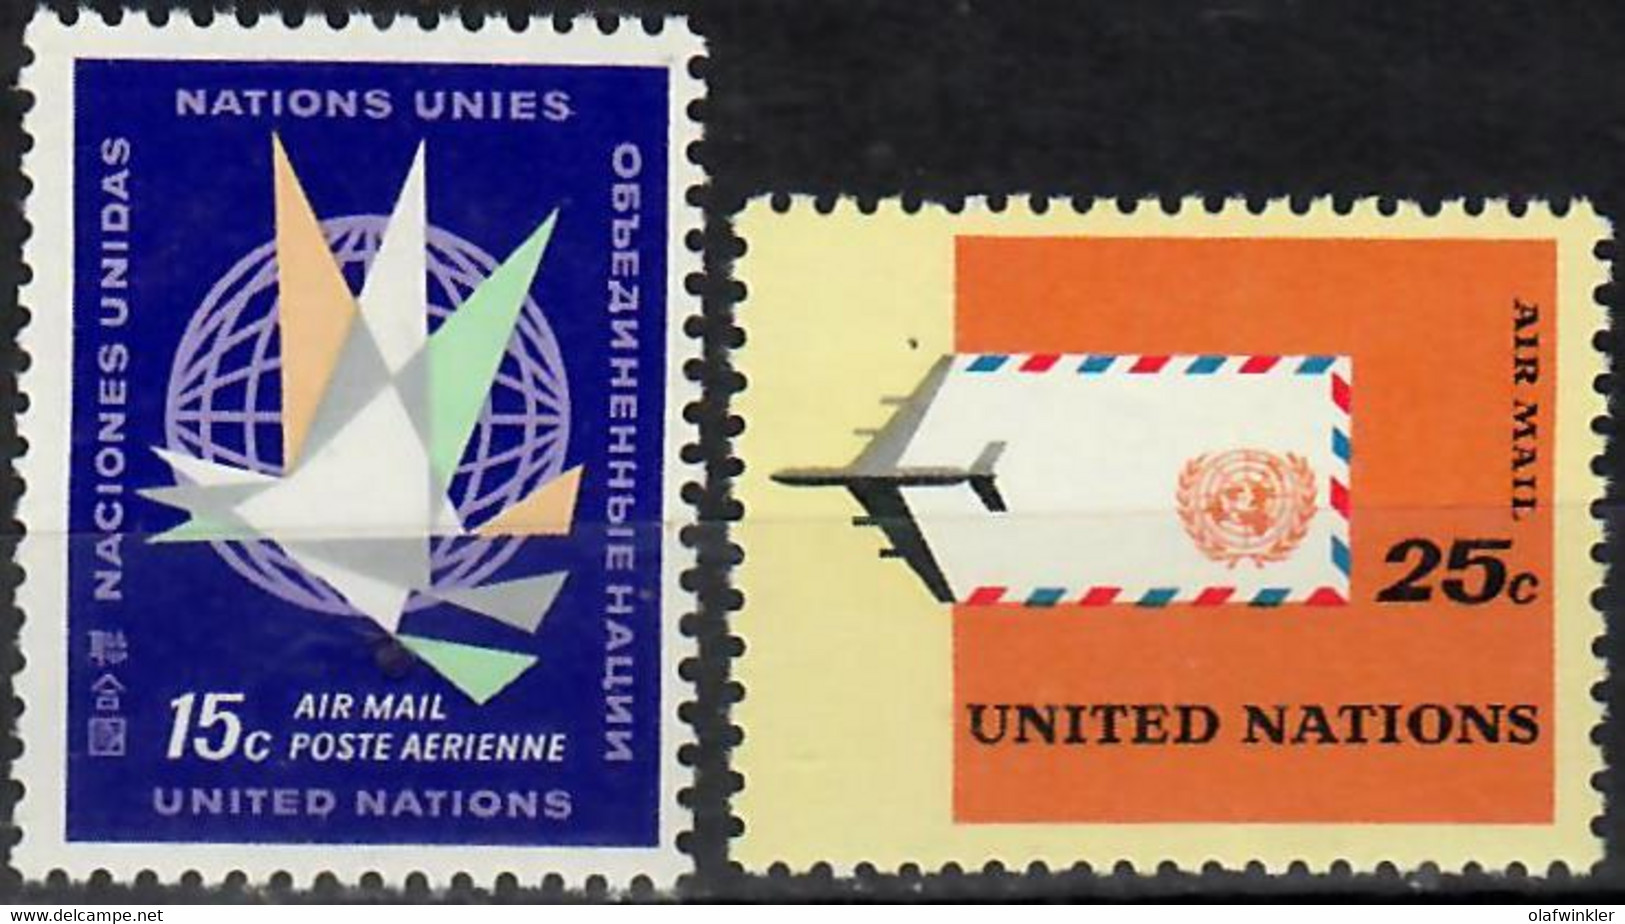 1964 Air Mail Sc C11-12 / YT A 11-12 / Mi 131-2 MNH / Neuf Sans Charniere / Postfrisch [zro] - Airmail